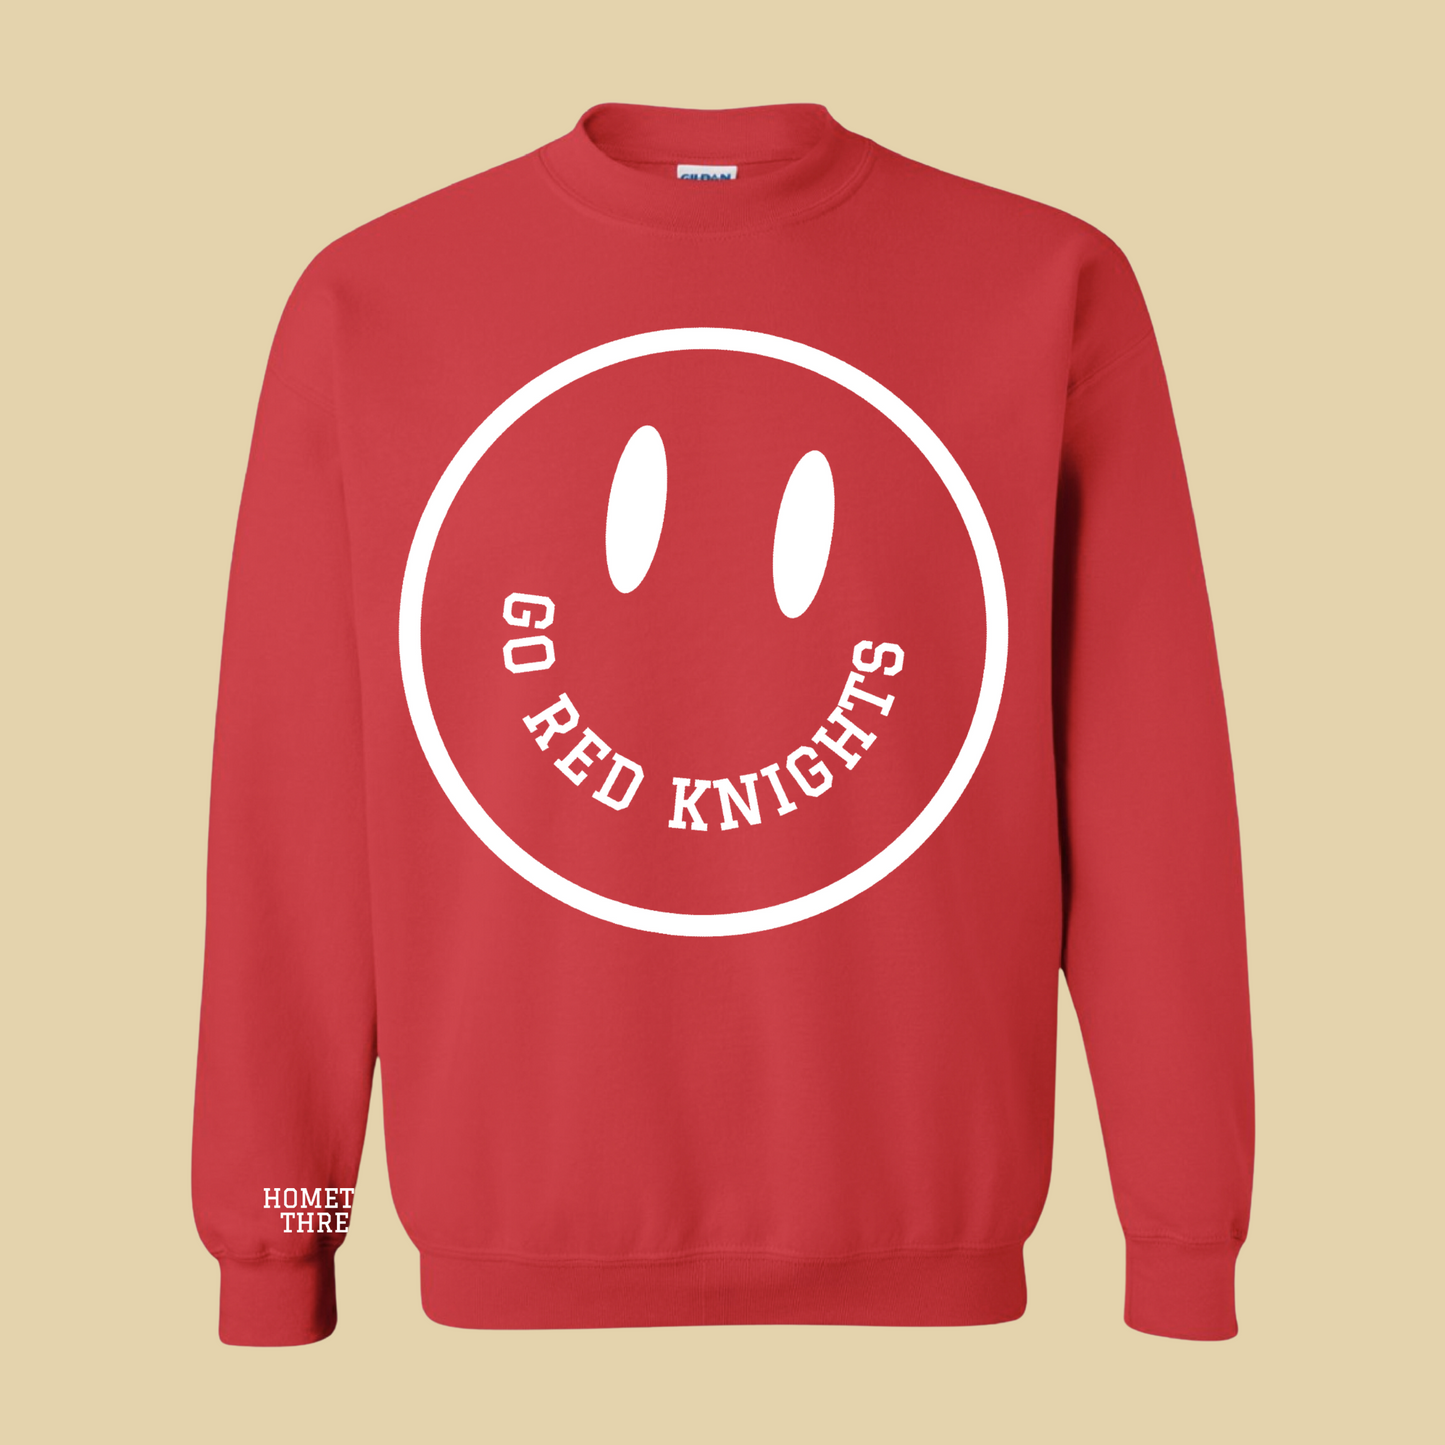 Go Red Knights - Smiley Sweatshirt